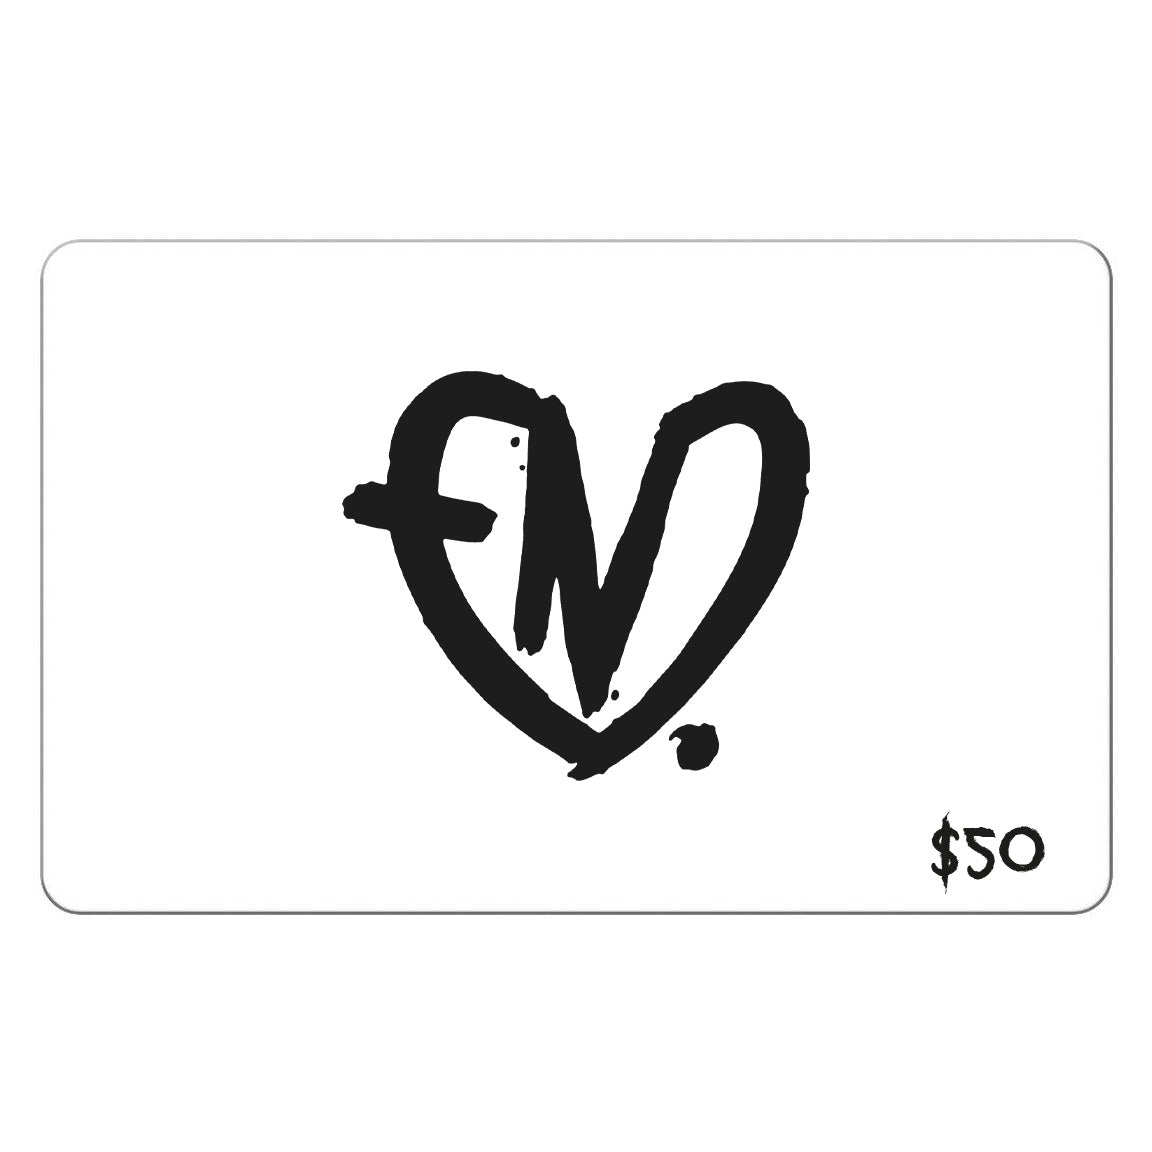 END Heart logo gift card - $50